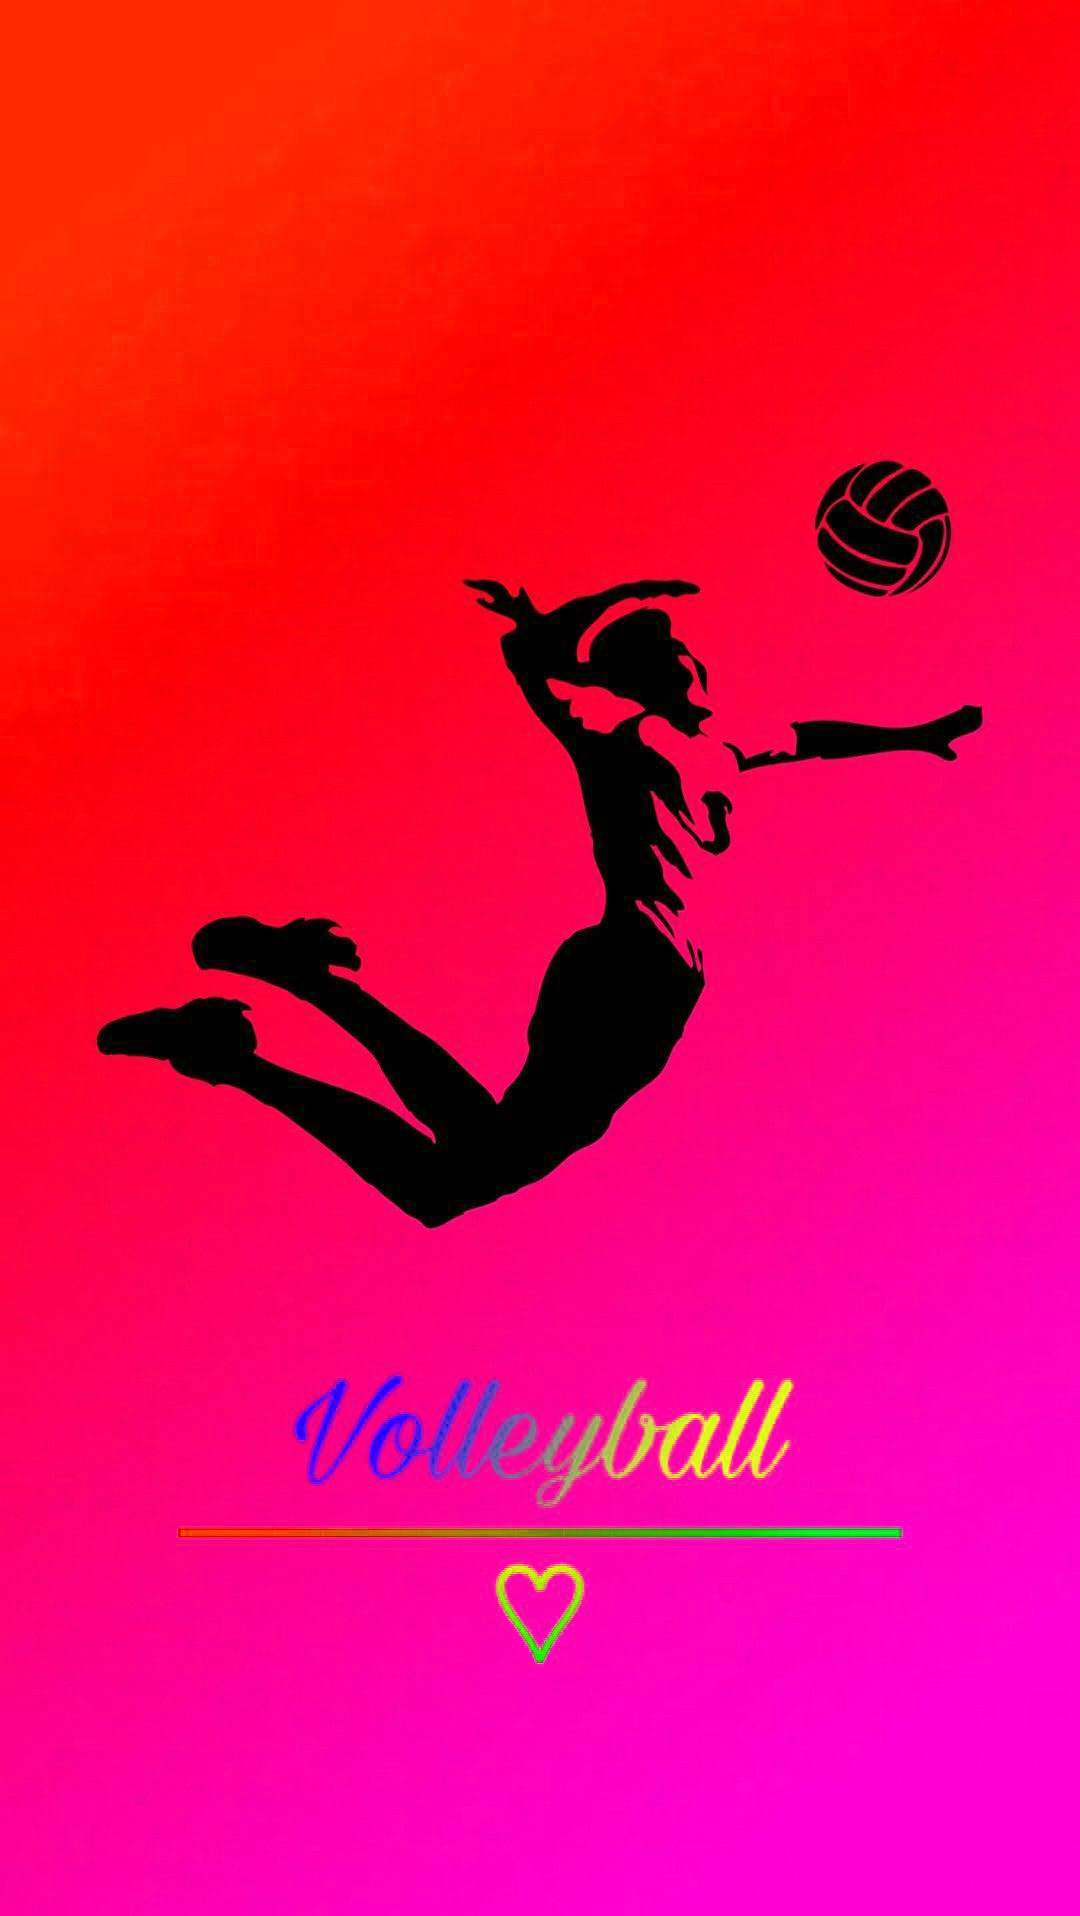 Volleyball Wallpaper - EnJpg